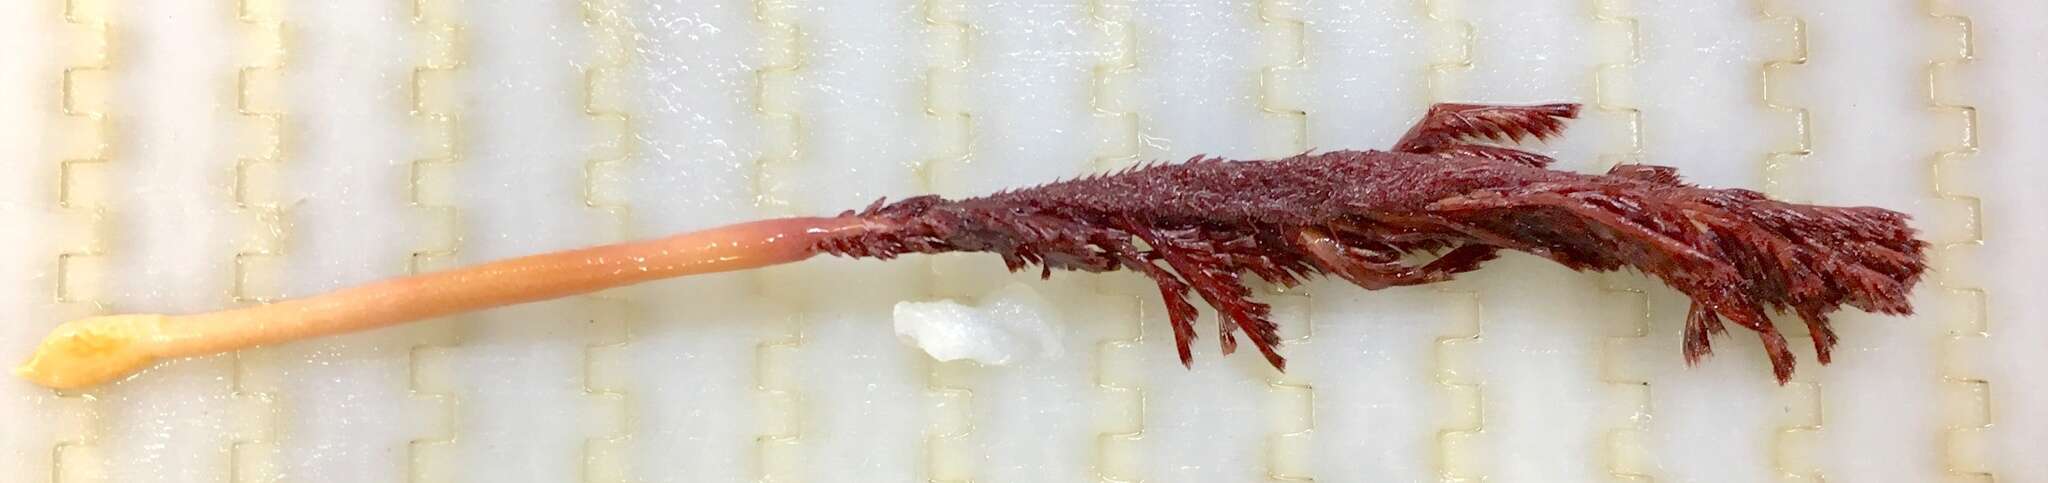 Image of thorny sea pen